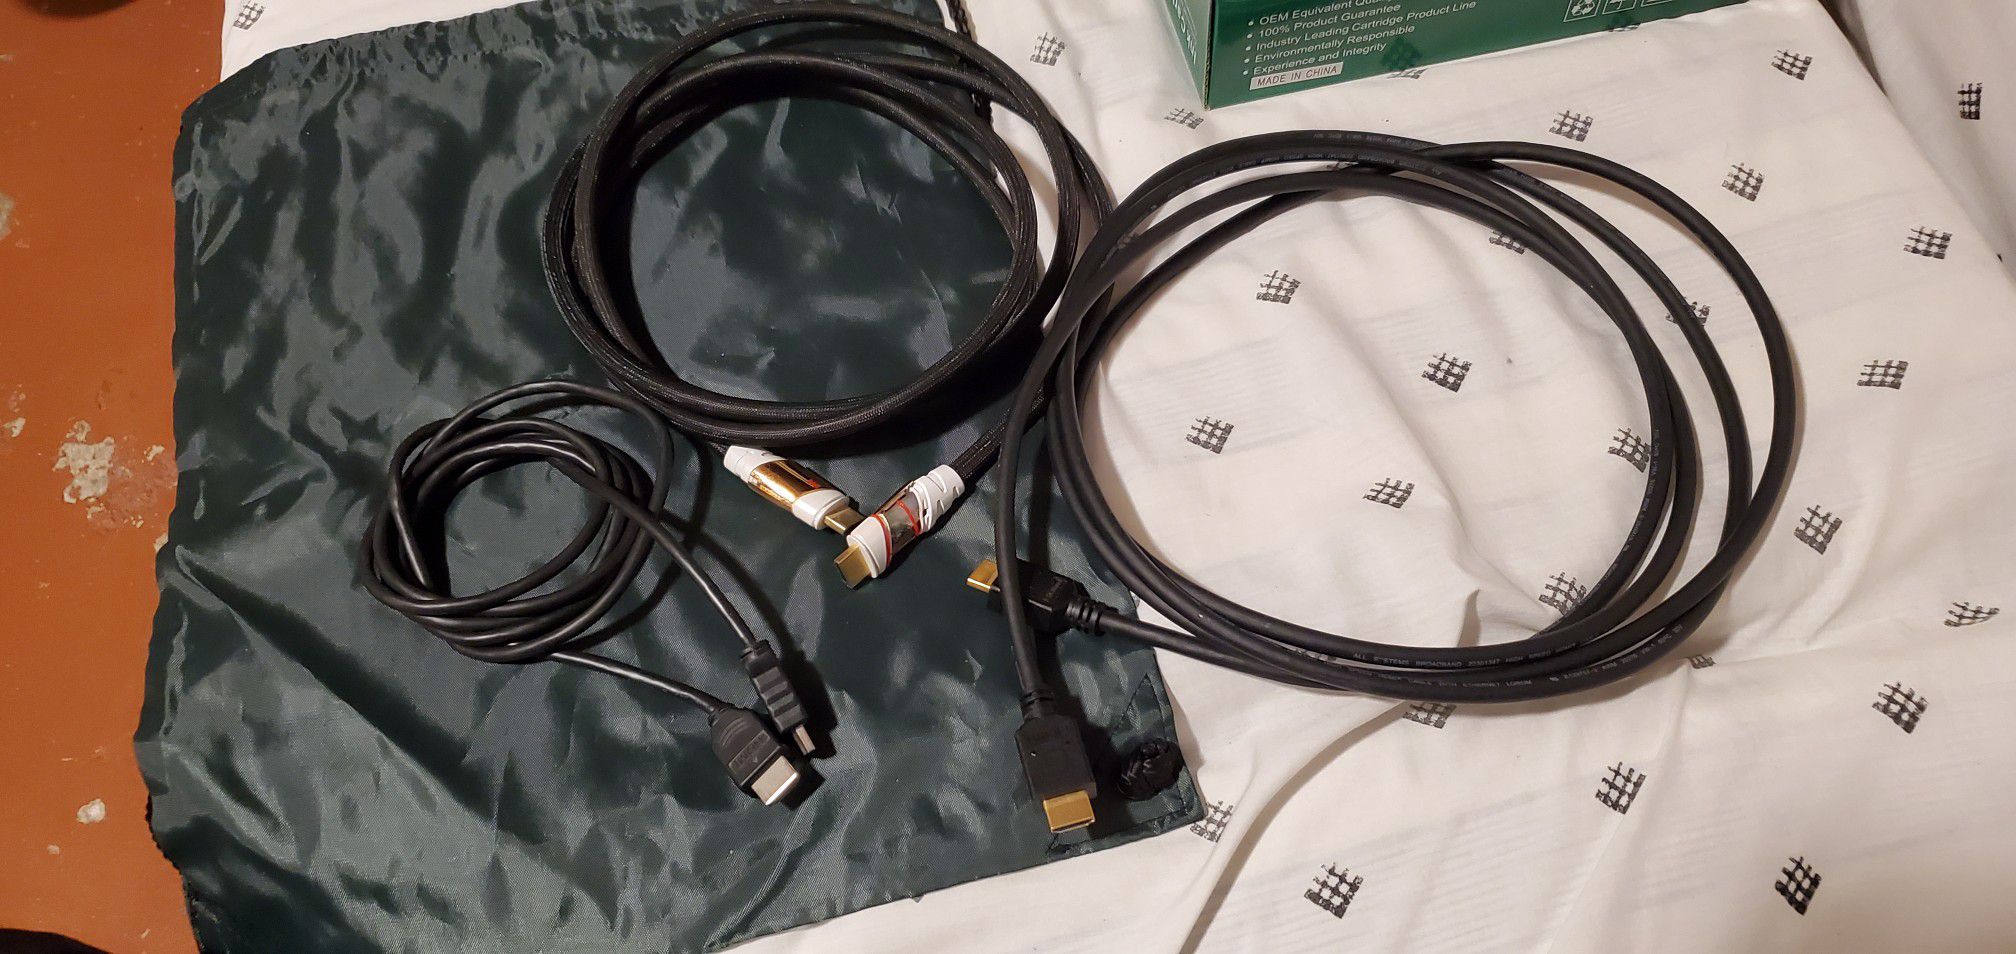 3 hdmi cables